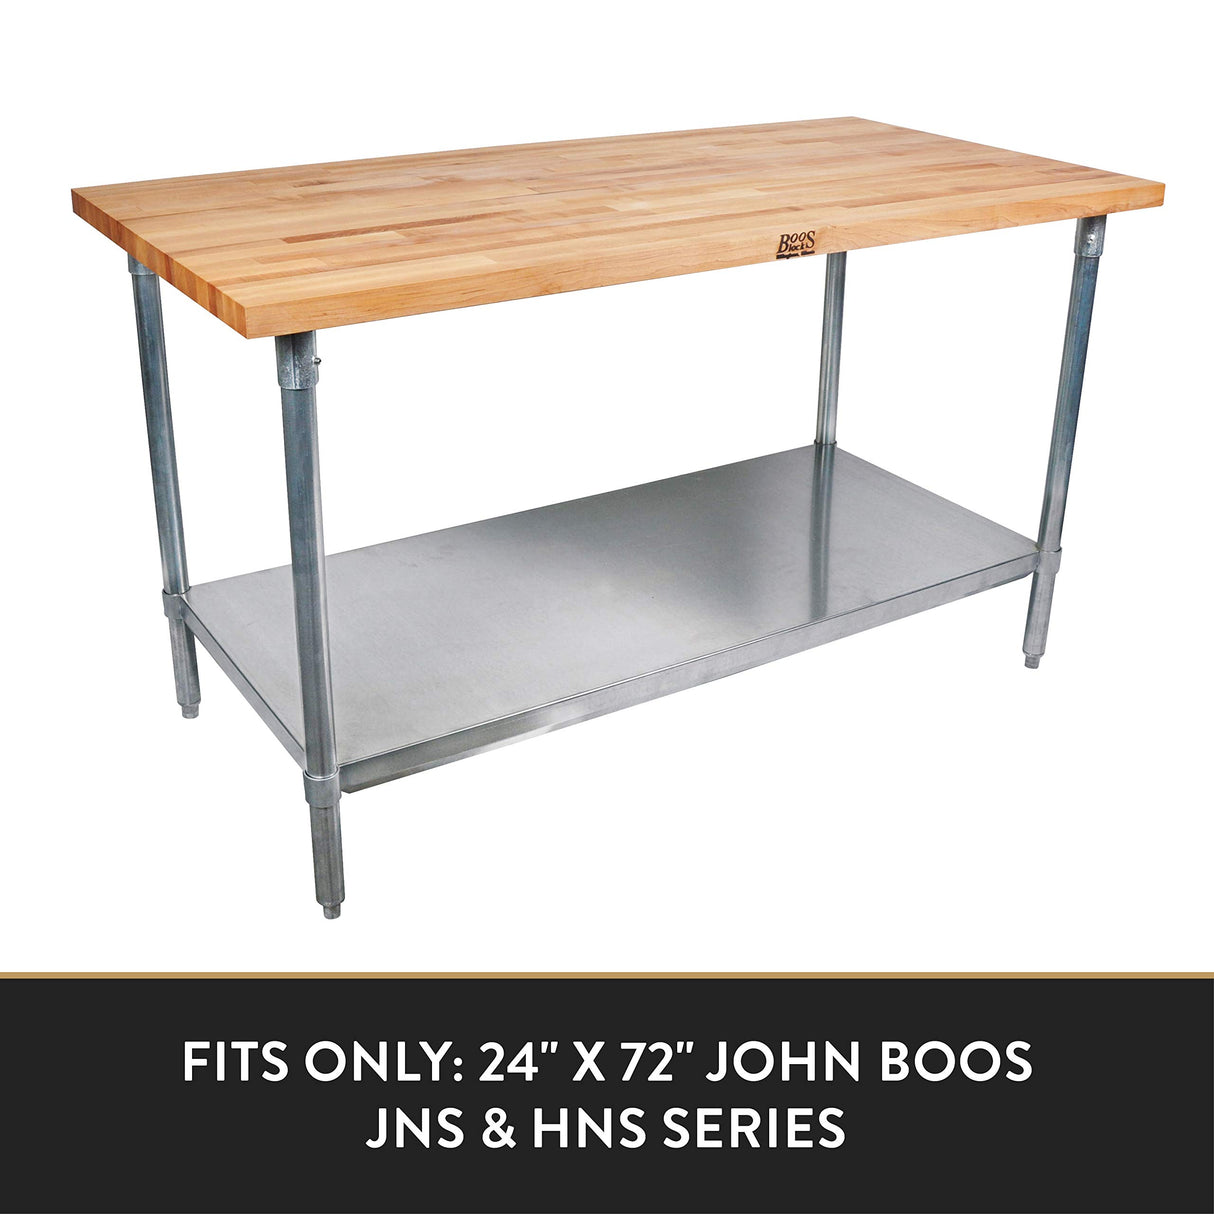 John Boos ESSK8-3072 Stainless Steel Additional/Add-On Work Table Lower Shelf/Undershelf (Shelf Only), 72"L x 30"W